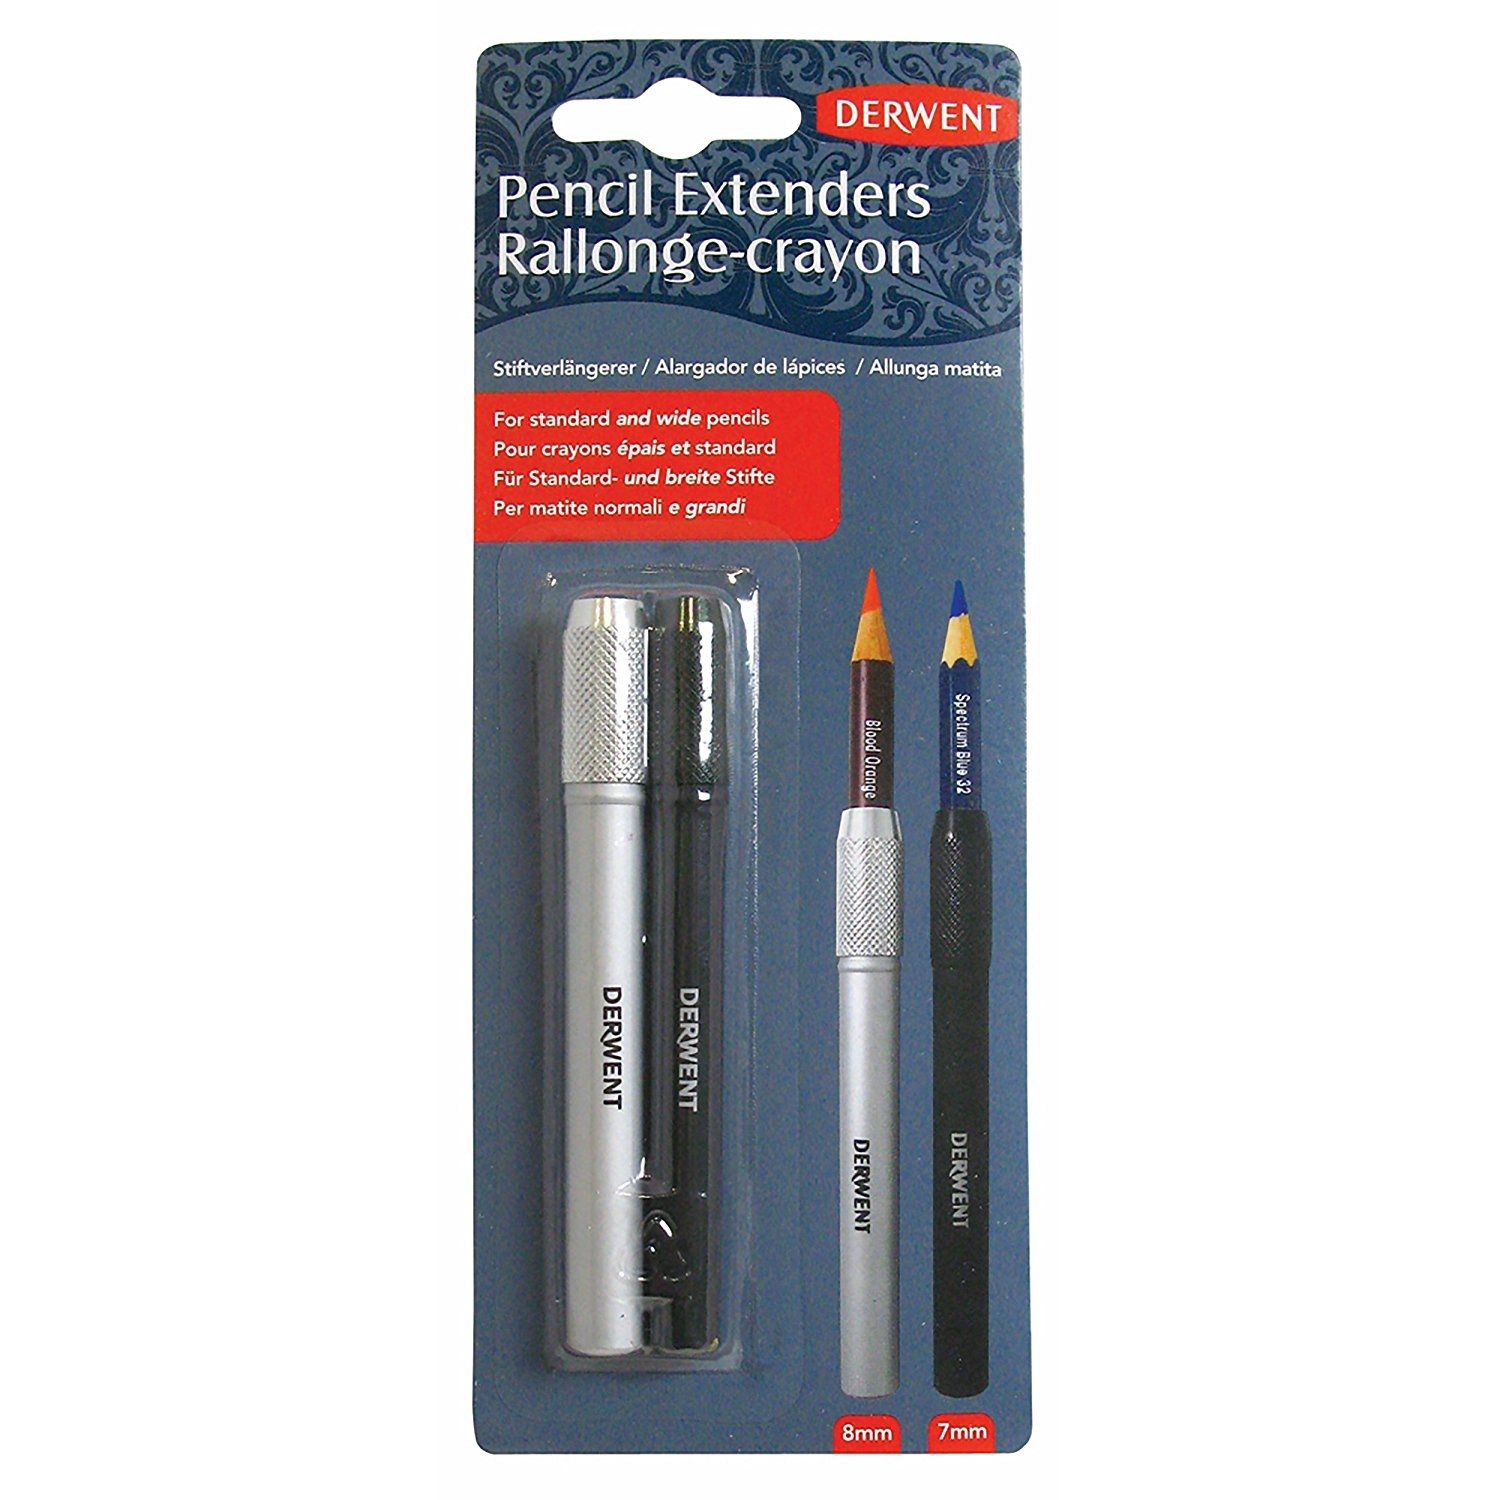 Derwent Pencil Extender Set, Silver and Black, for Pencils upto 8mm, 2 Pack